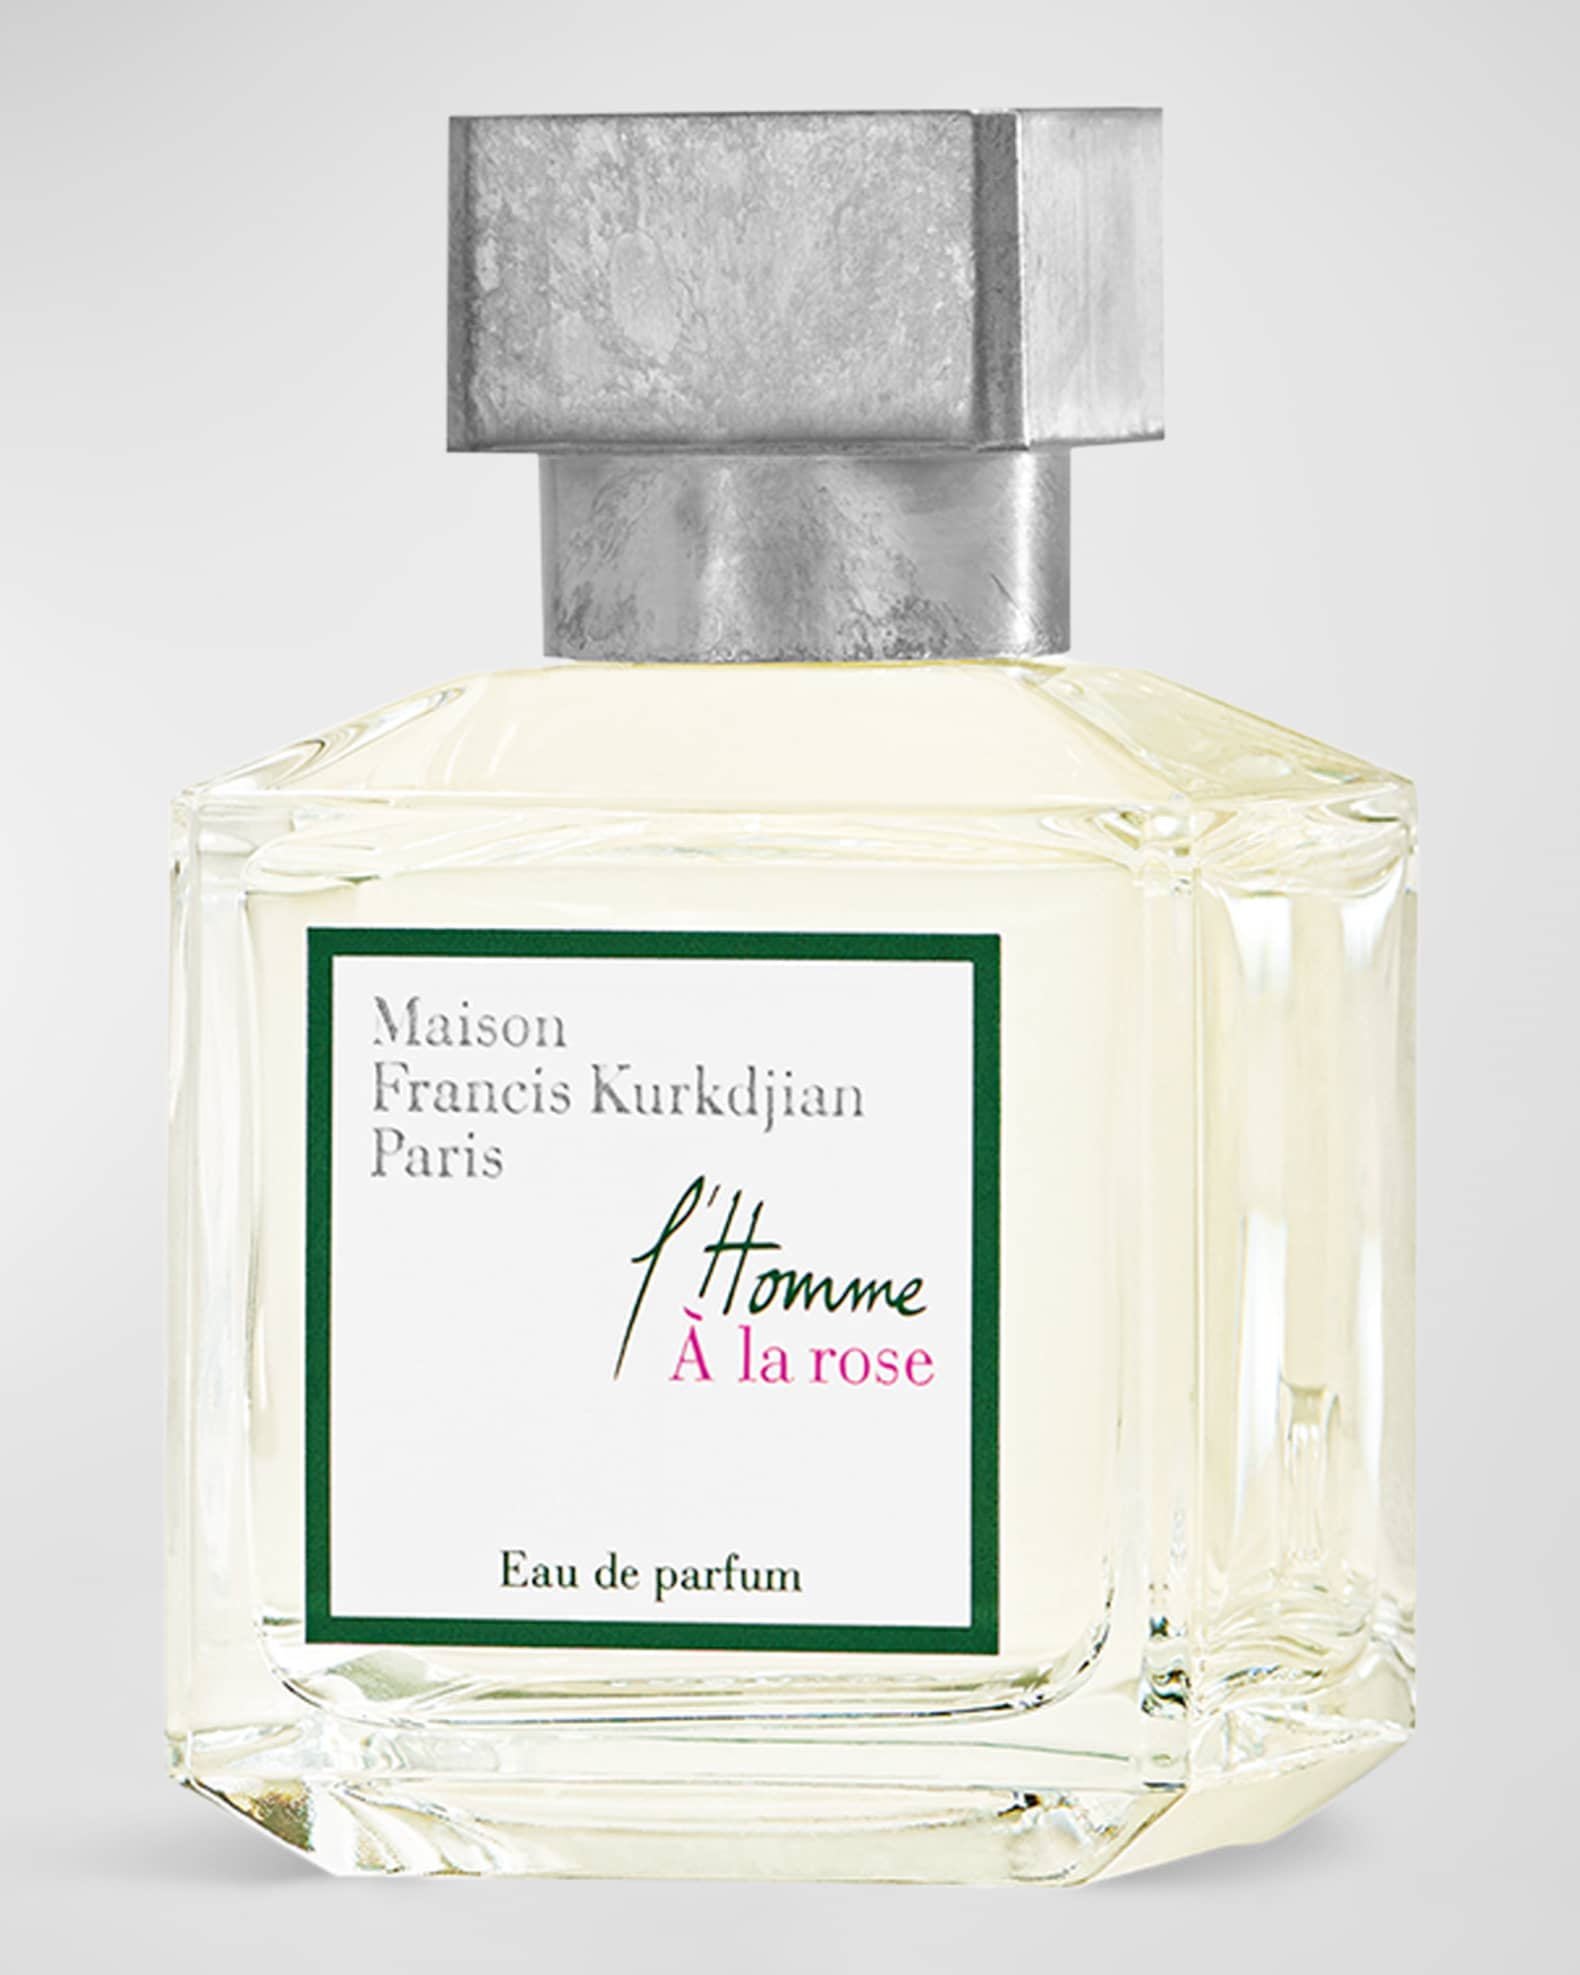 Les Parfums Louis Vuitton: A Collection of Seven Olfactory Emotions